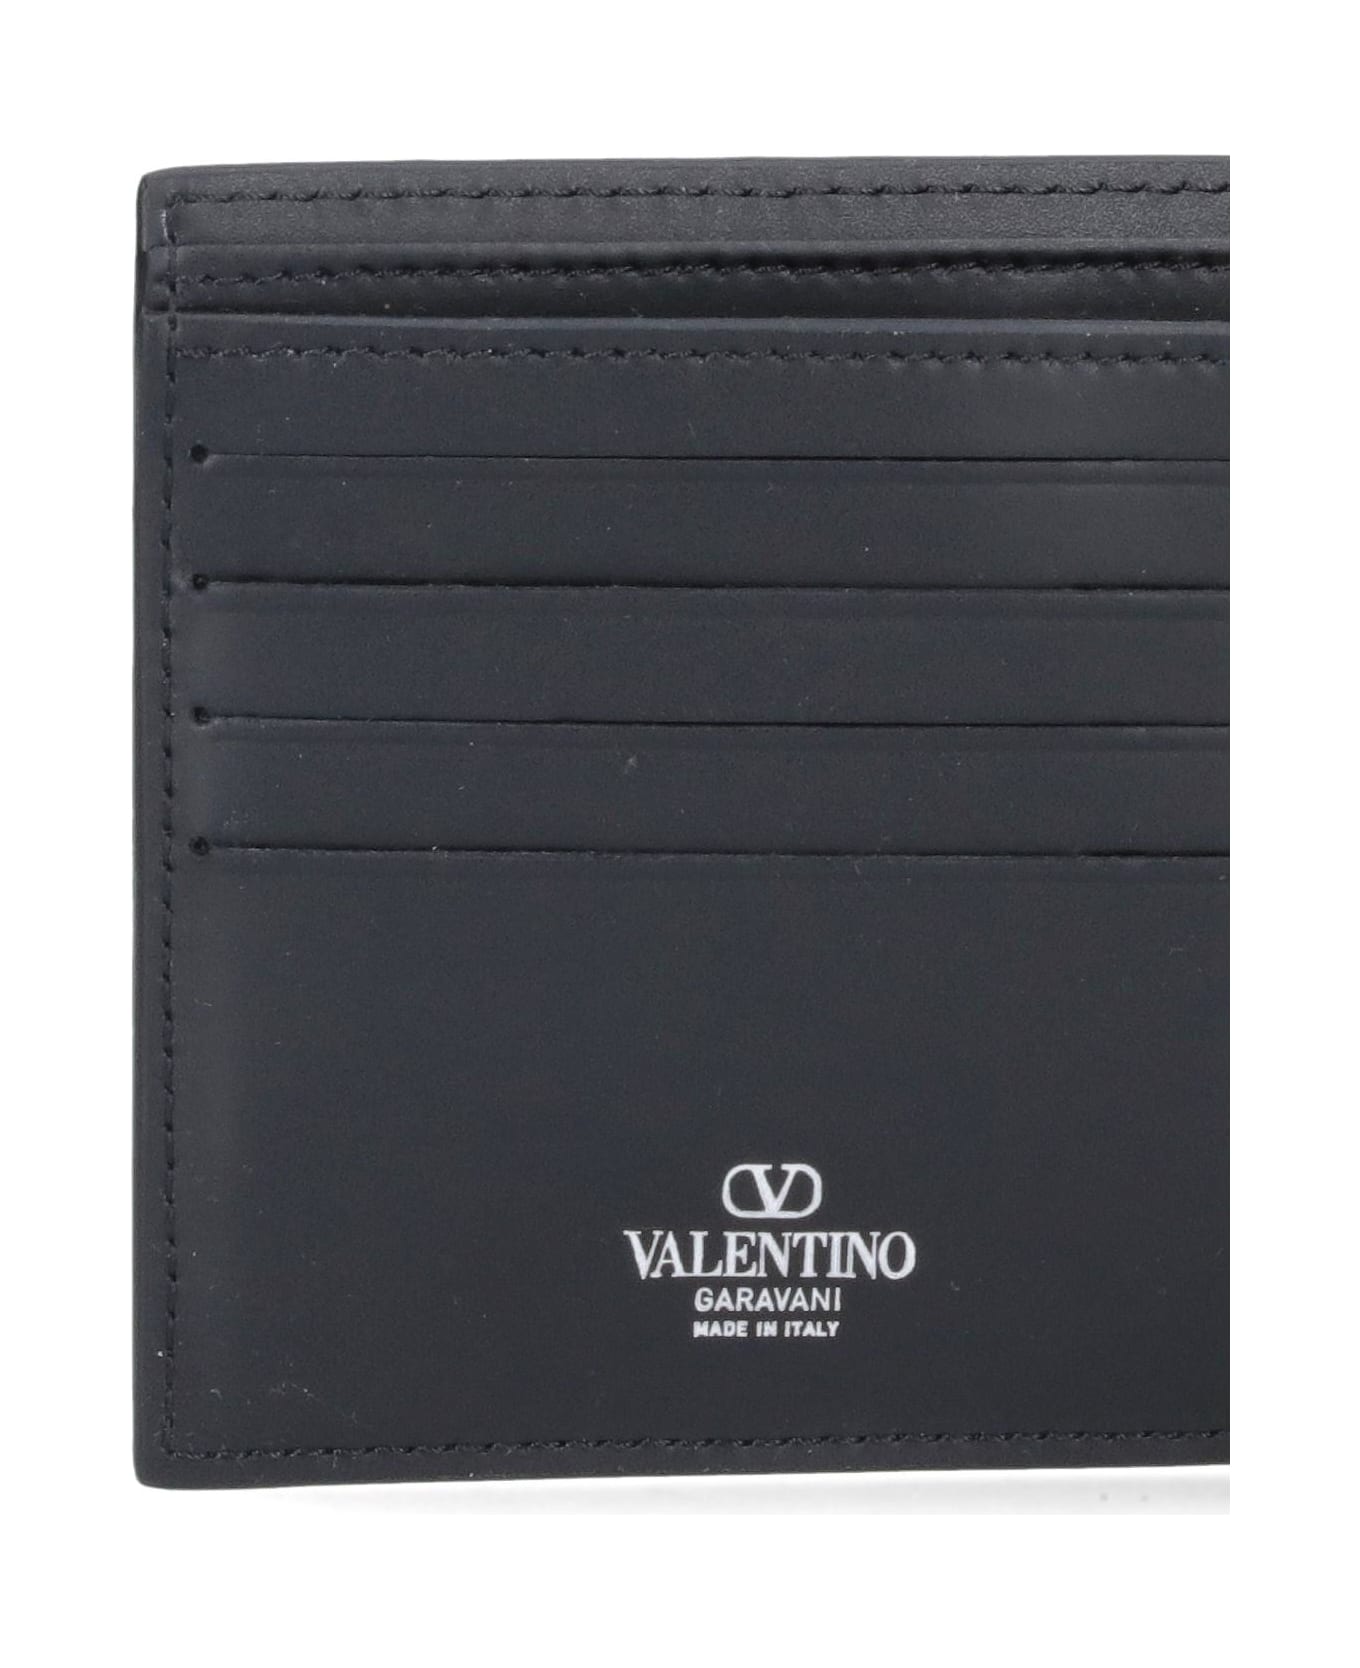 Valentino Garavani Logo Wallet - Nero/bianco